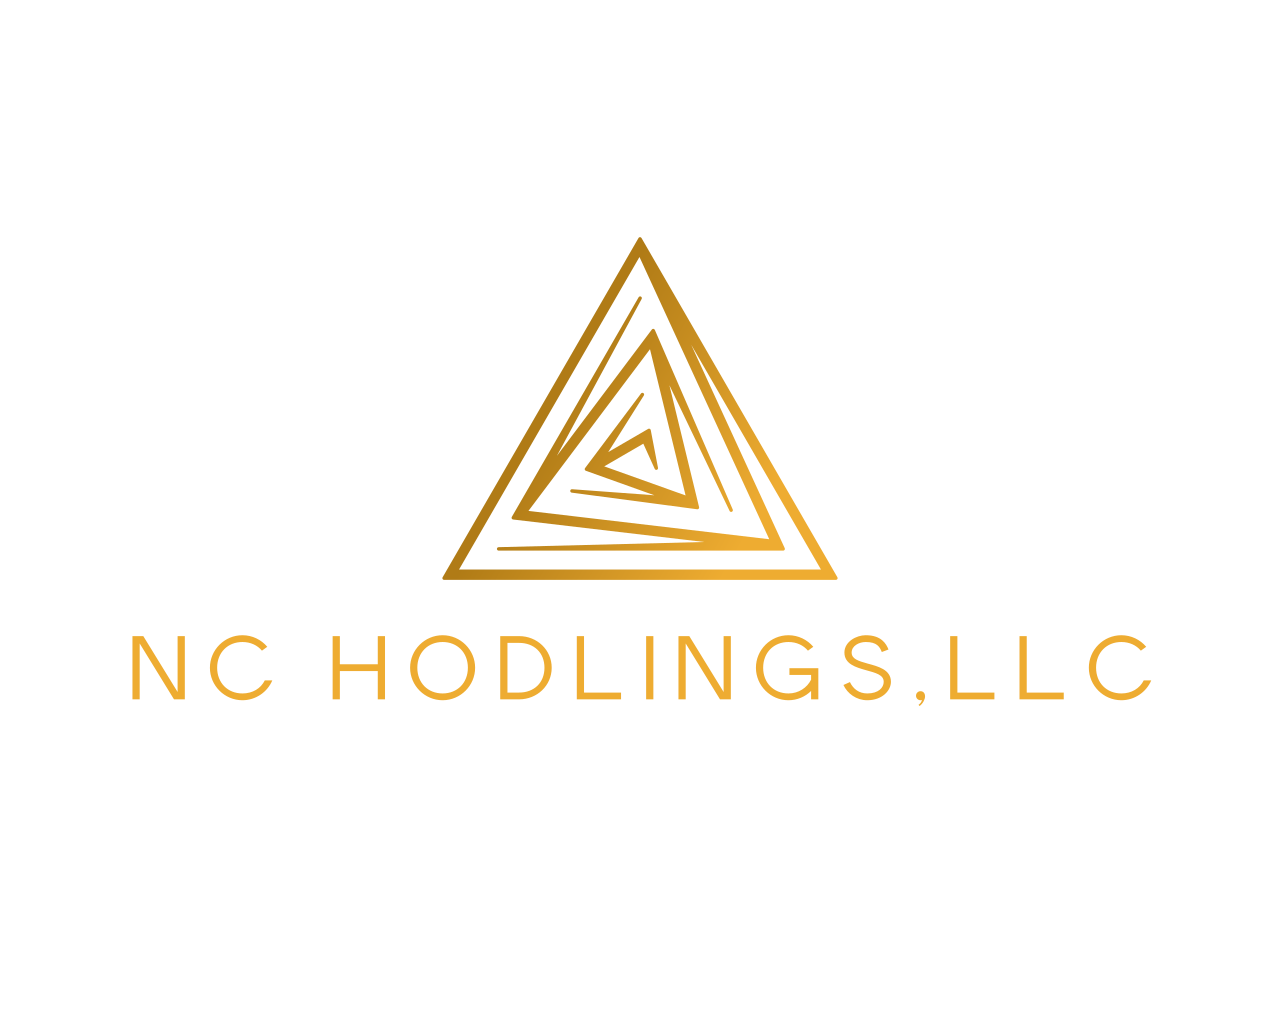 NC HOLDINGS, LLC